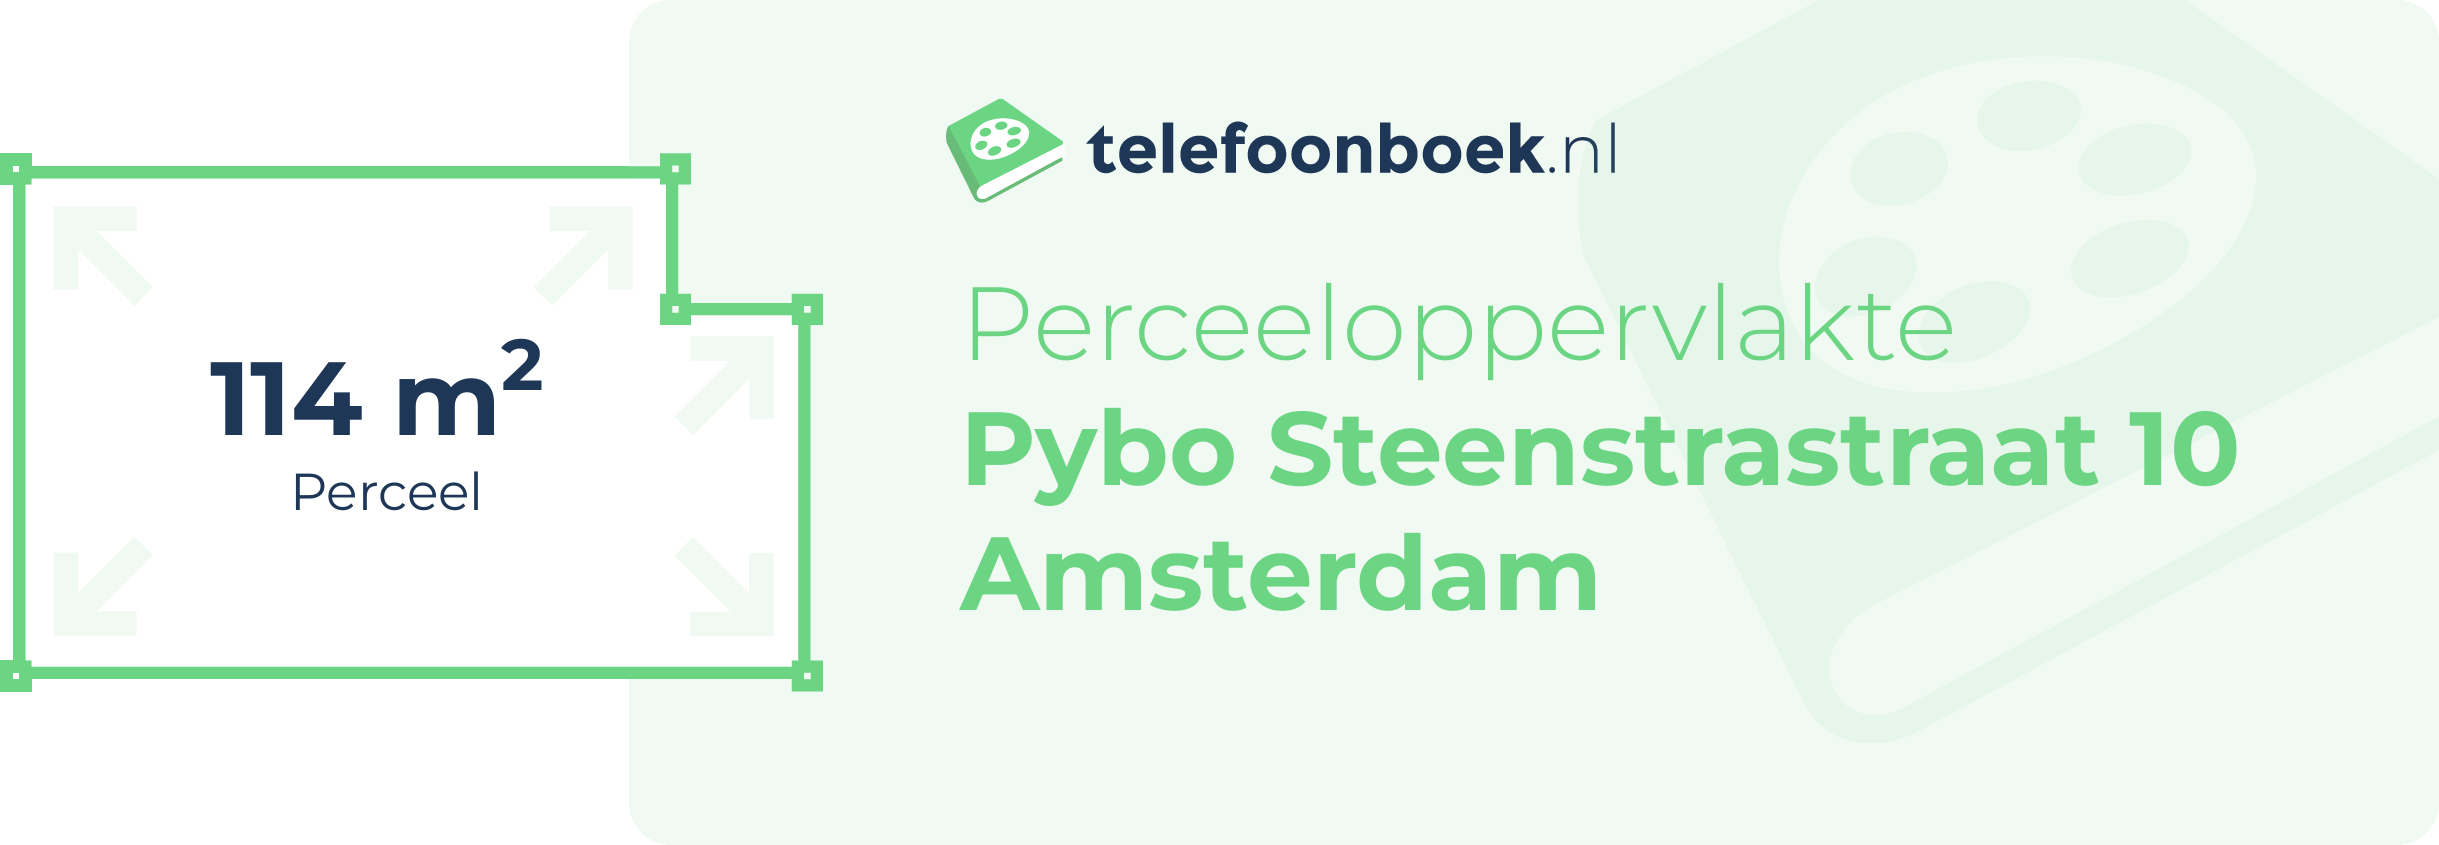 Perceeloppervlakte Pybo Steenstrastraat 10 Amsterdam